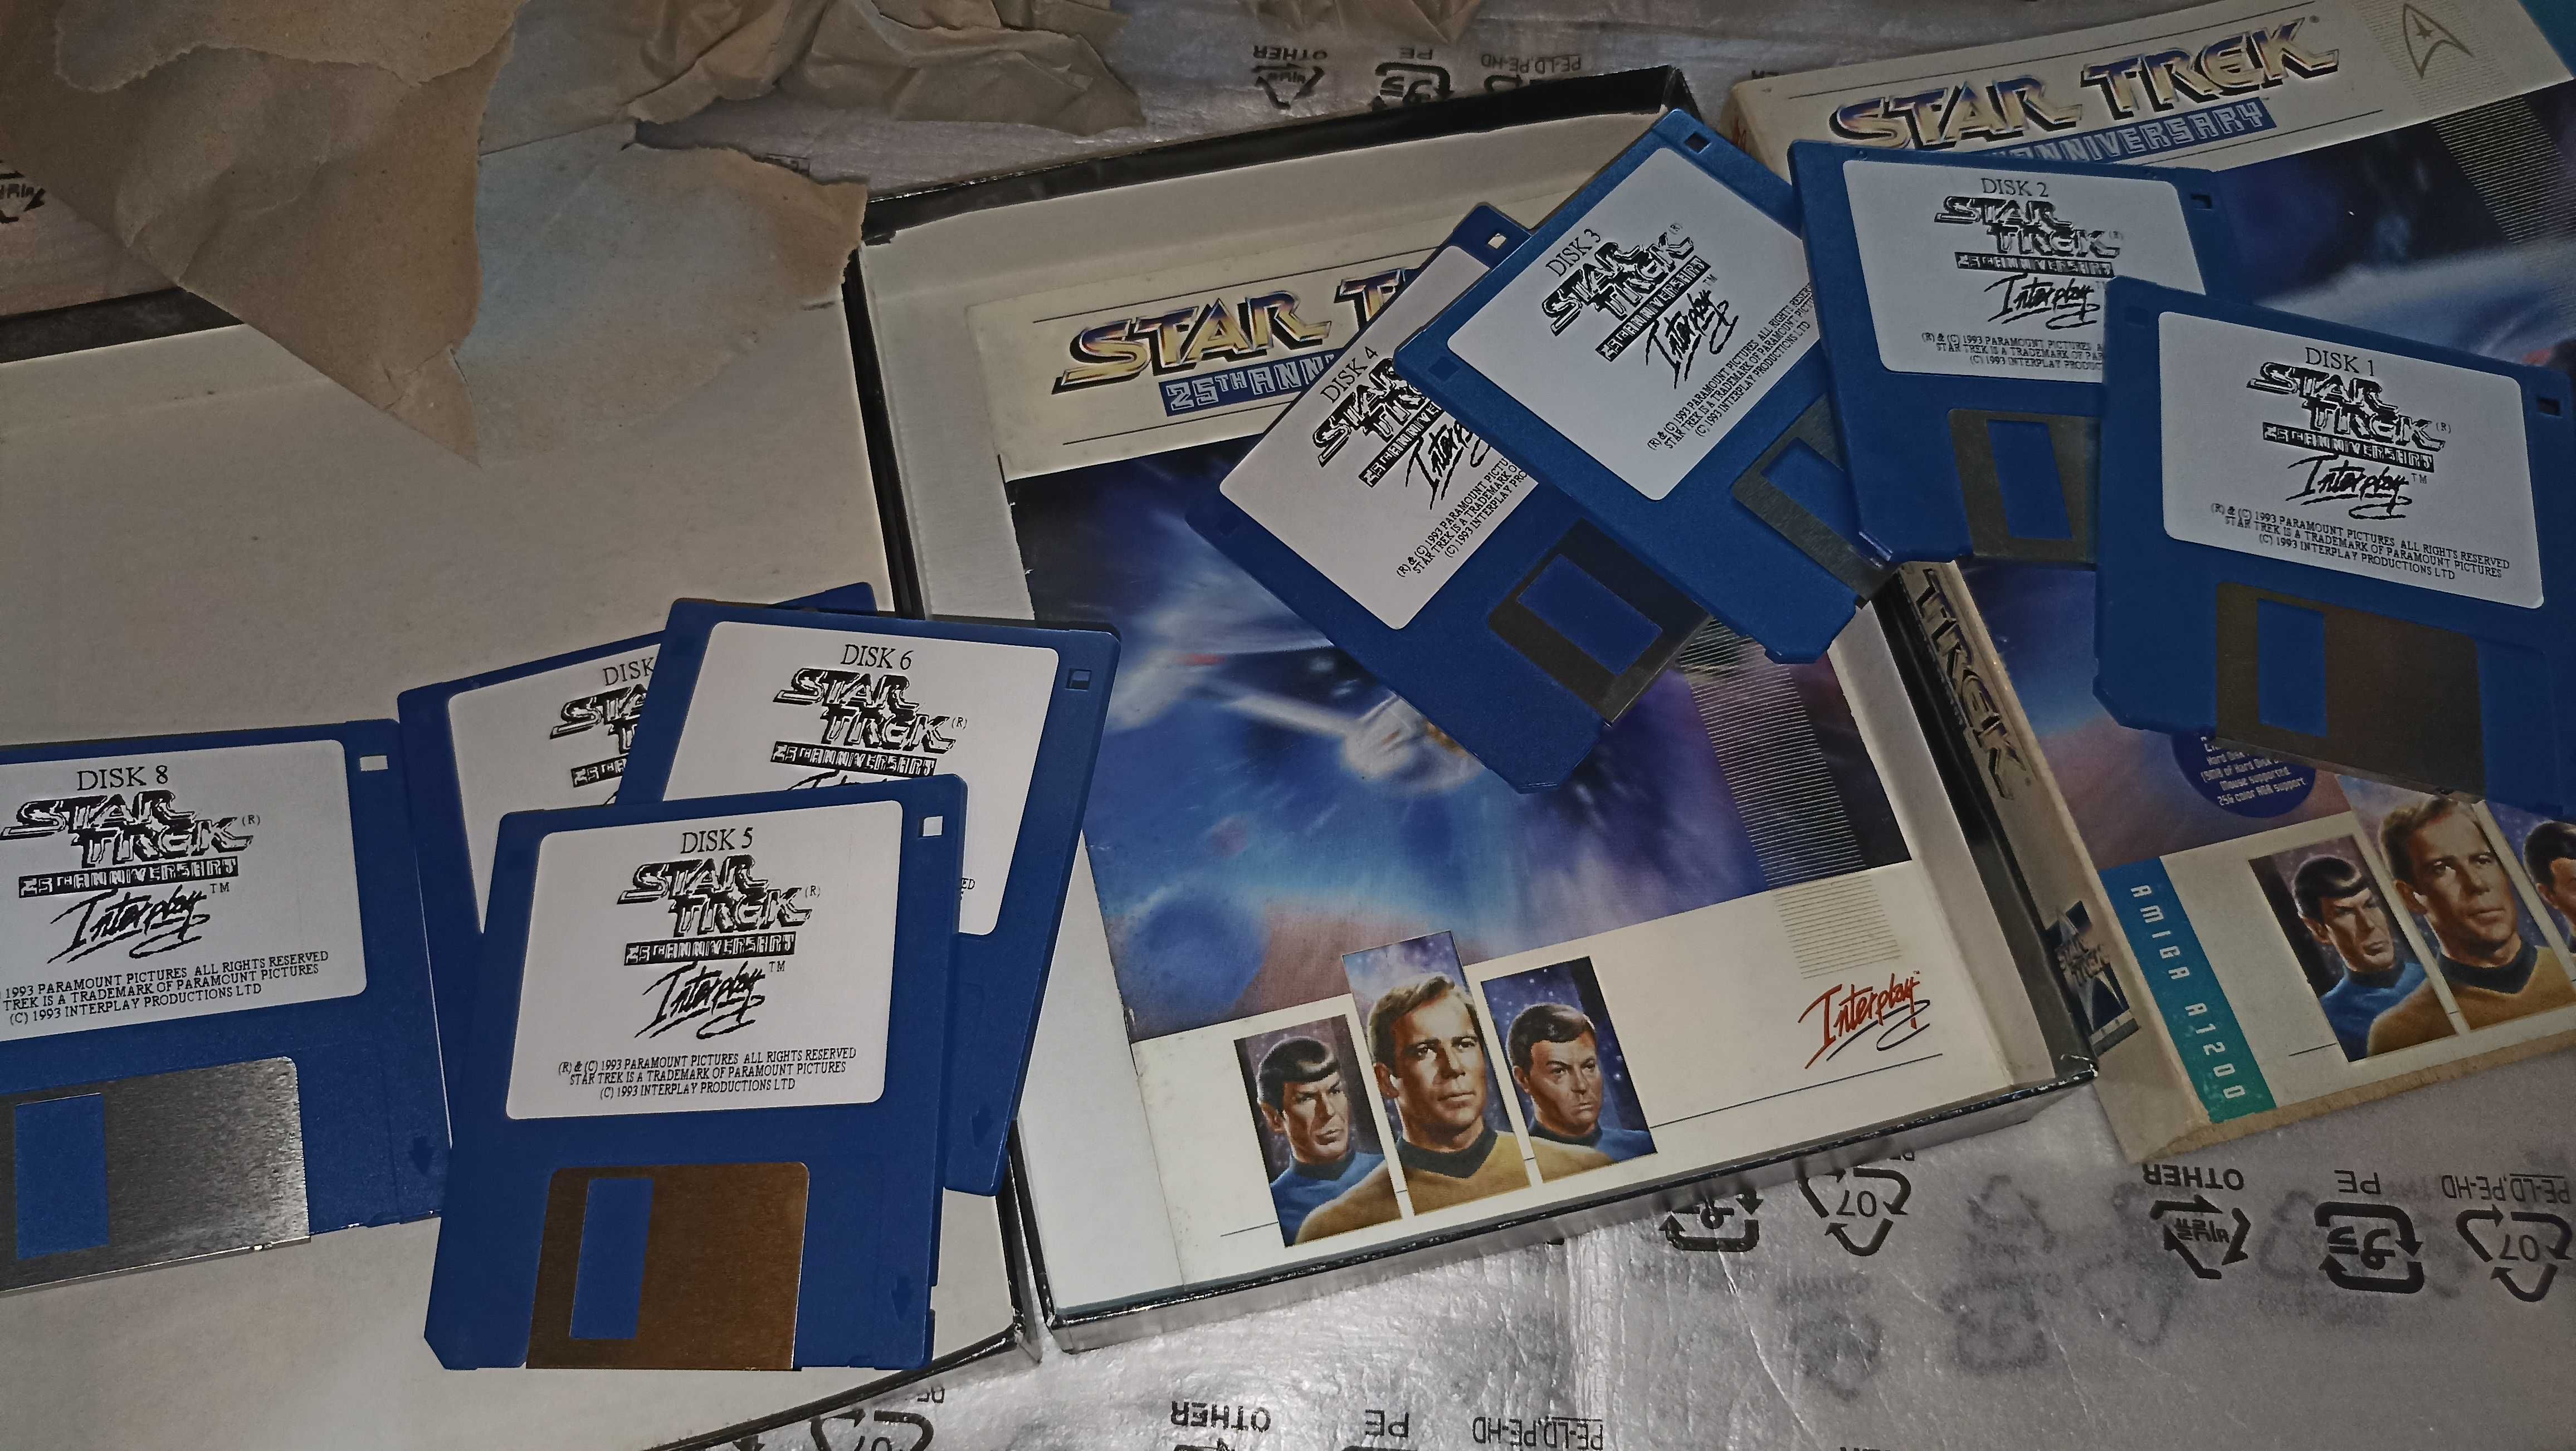 Star Trek 25th Anniversary Amiga 1200 gra